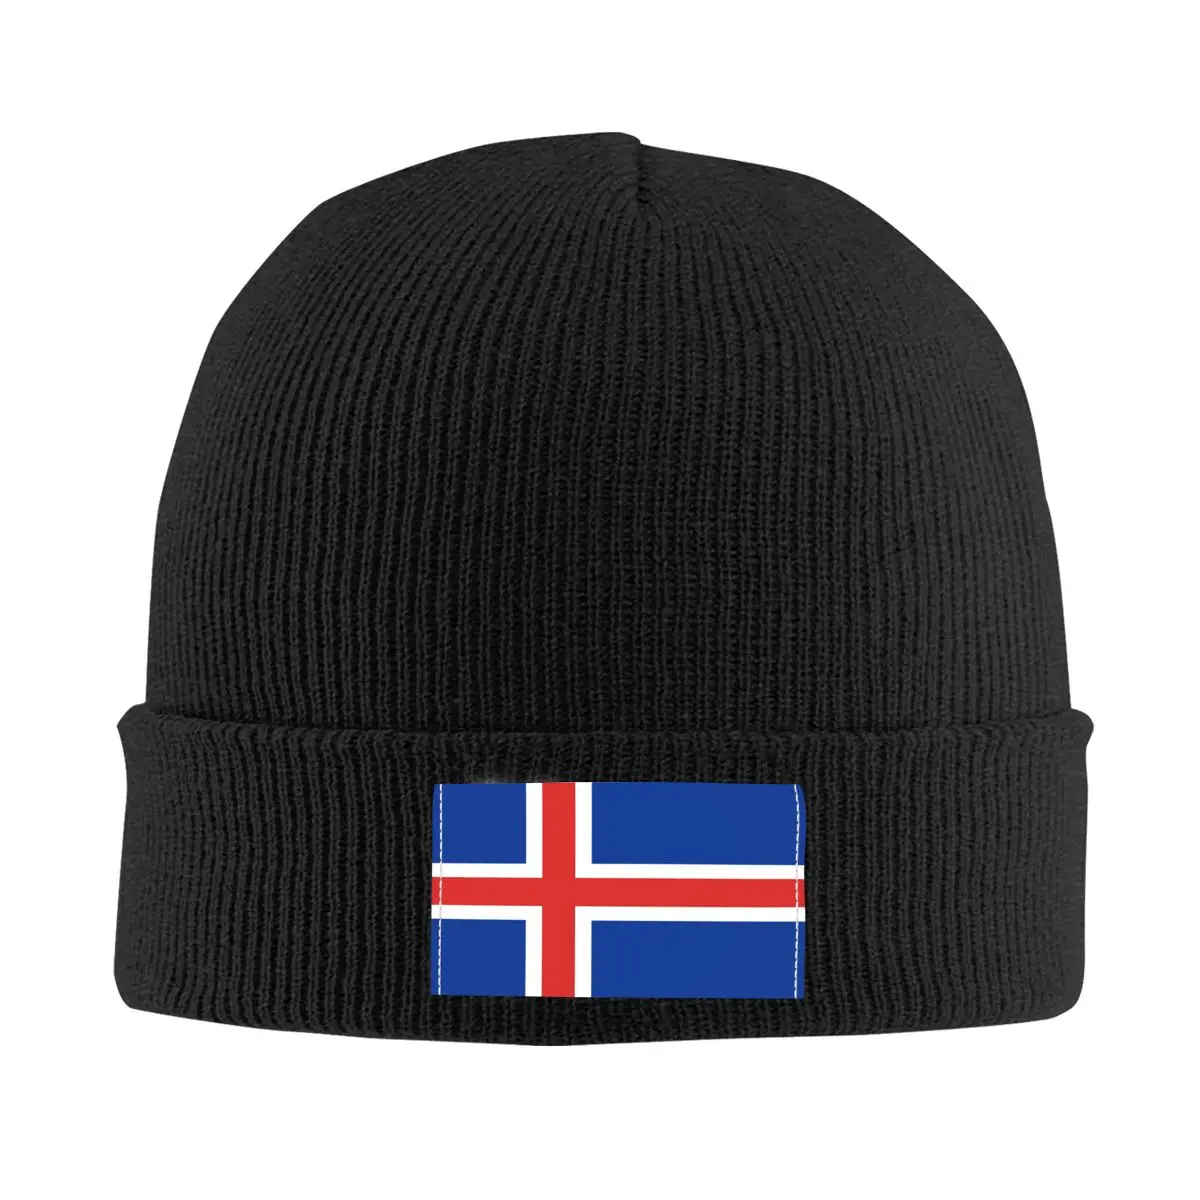 Flag Of Iceland Bonnet Hat Knitted Hat Men Women Cool Unisex Adult Warm Winter Skullies Beanies Caps 1